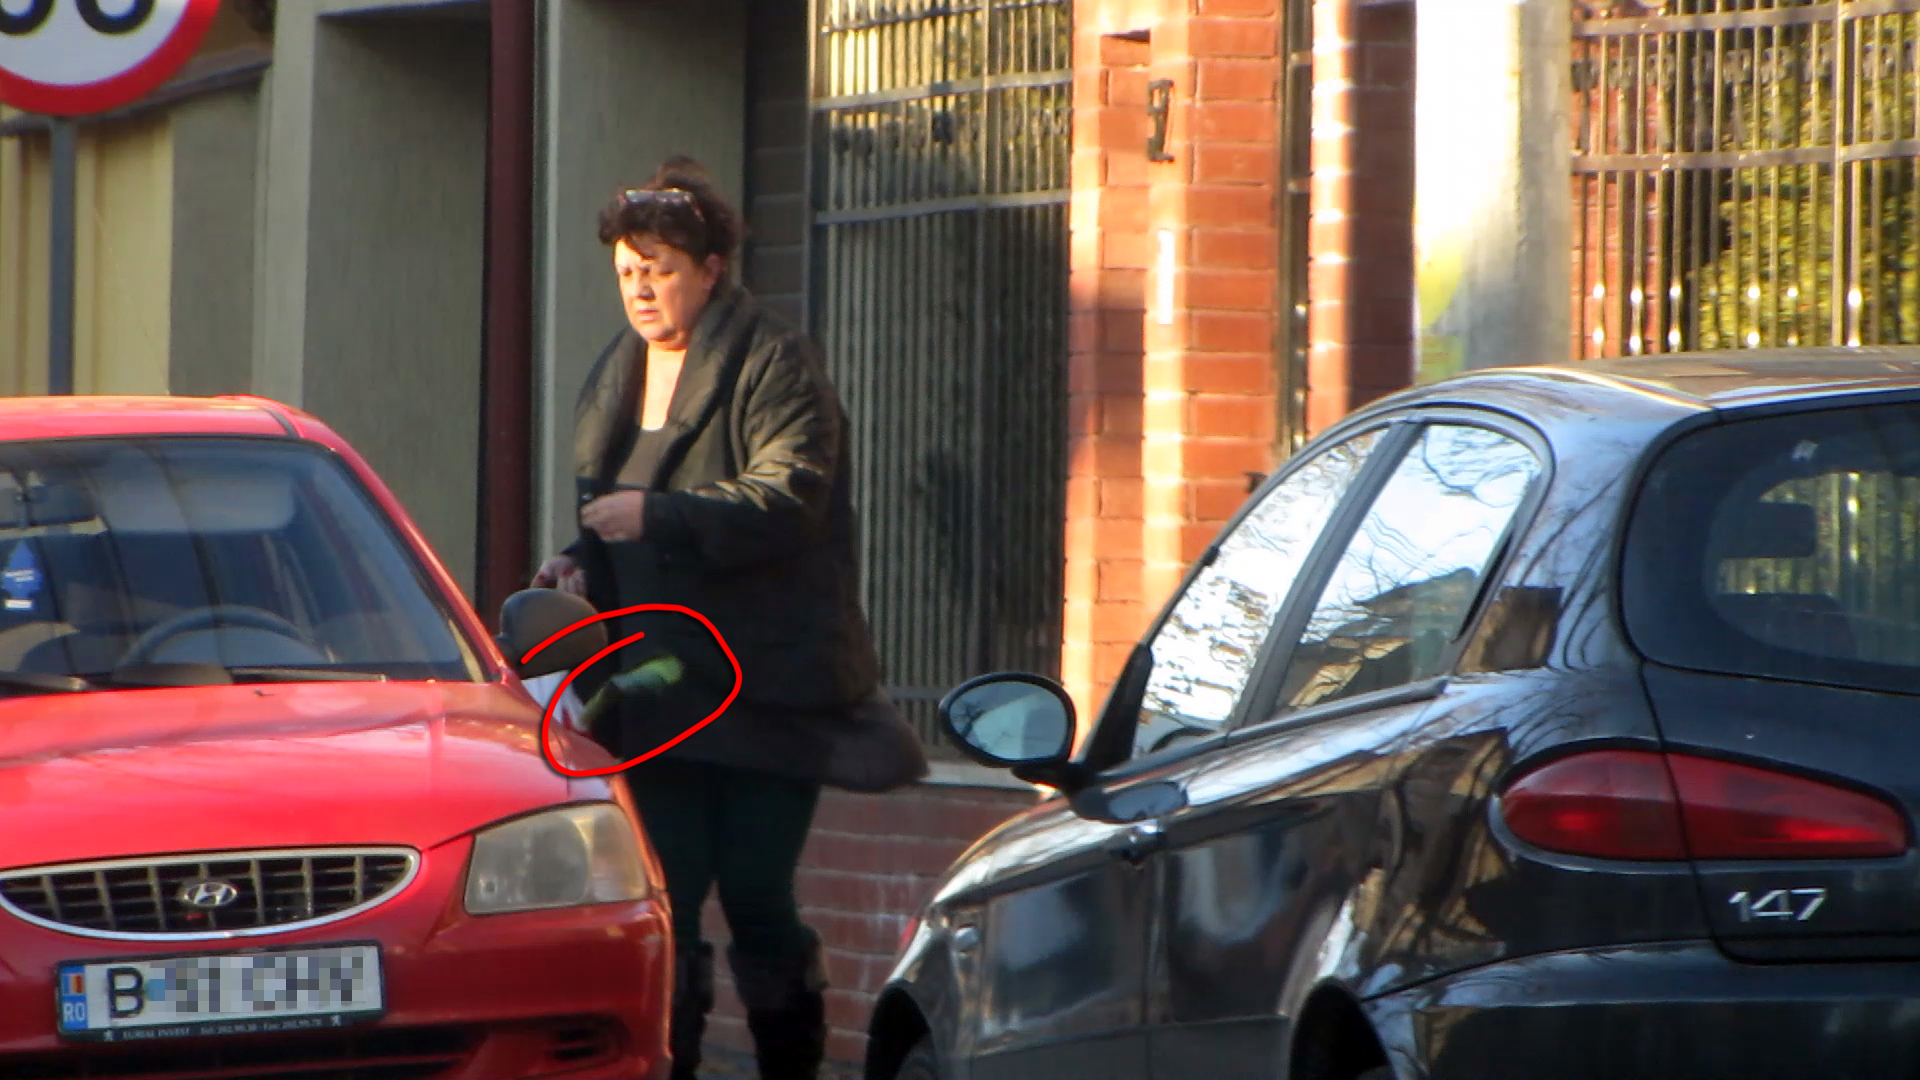 Femeia scoate din masina o sacosa din care se iteste coada lunga a unui praz